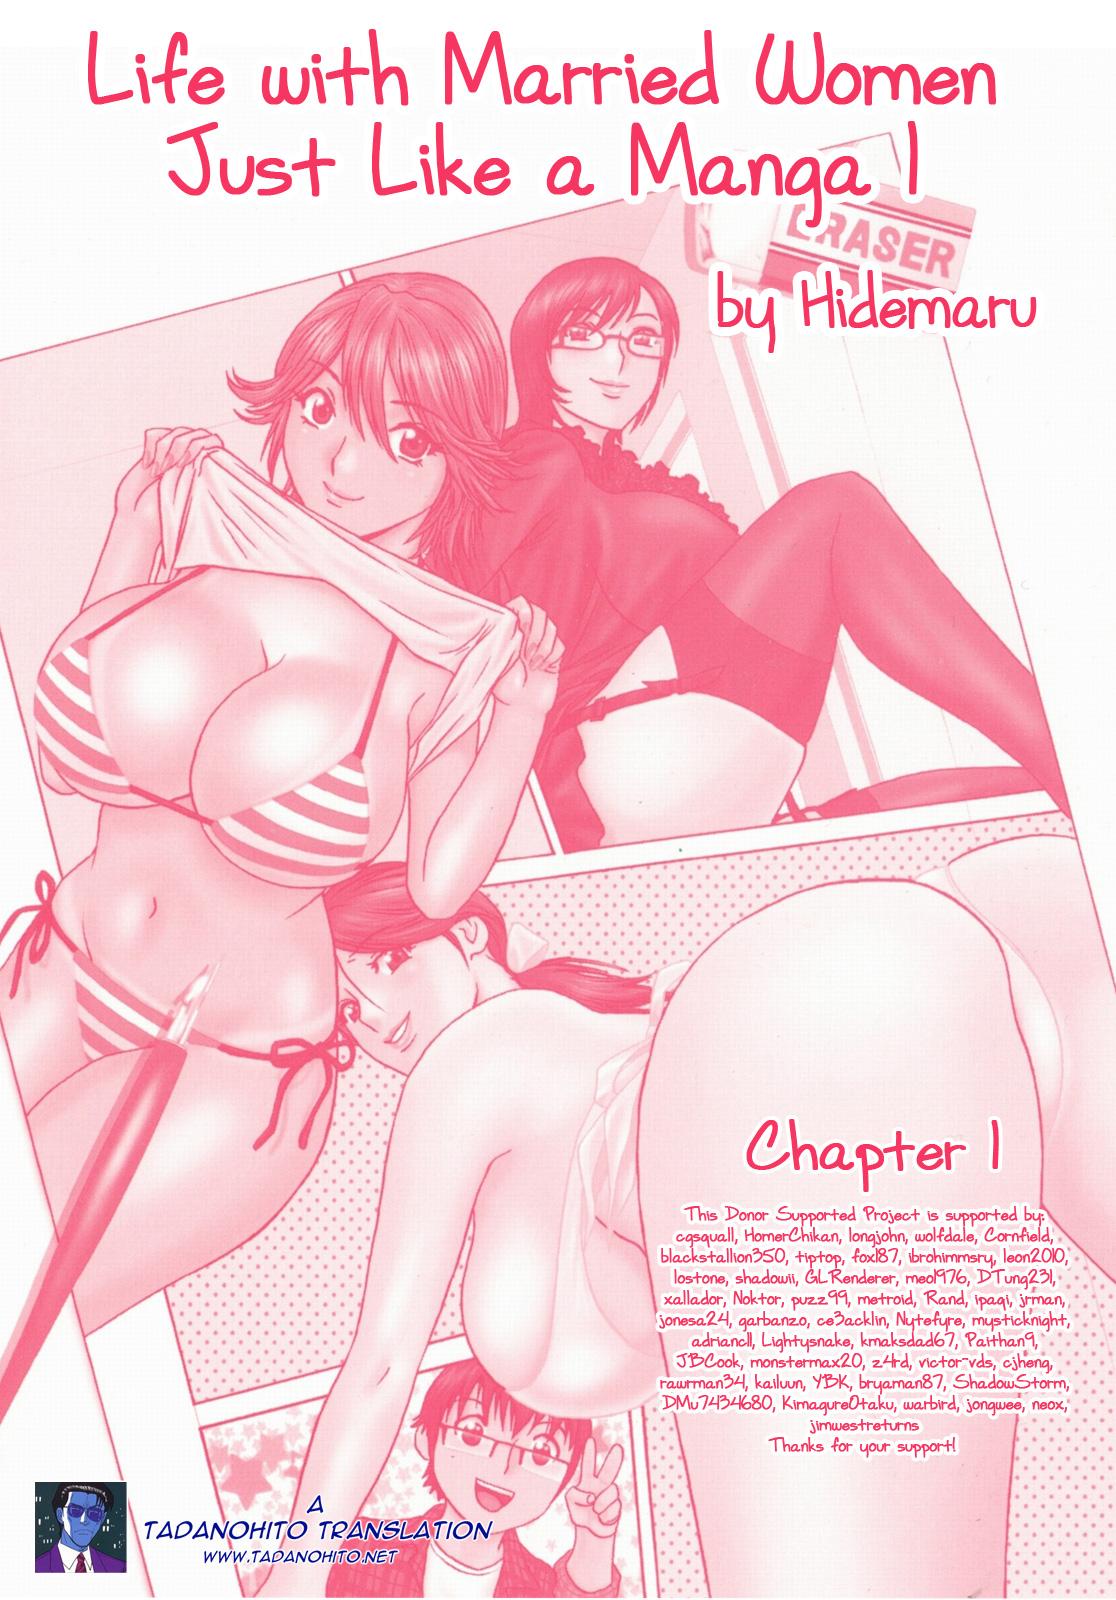 [Hidemaru] Life with Married Women Just Like a Manga 1 - Ch. 1-2 [English] {Tadanohito} 25